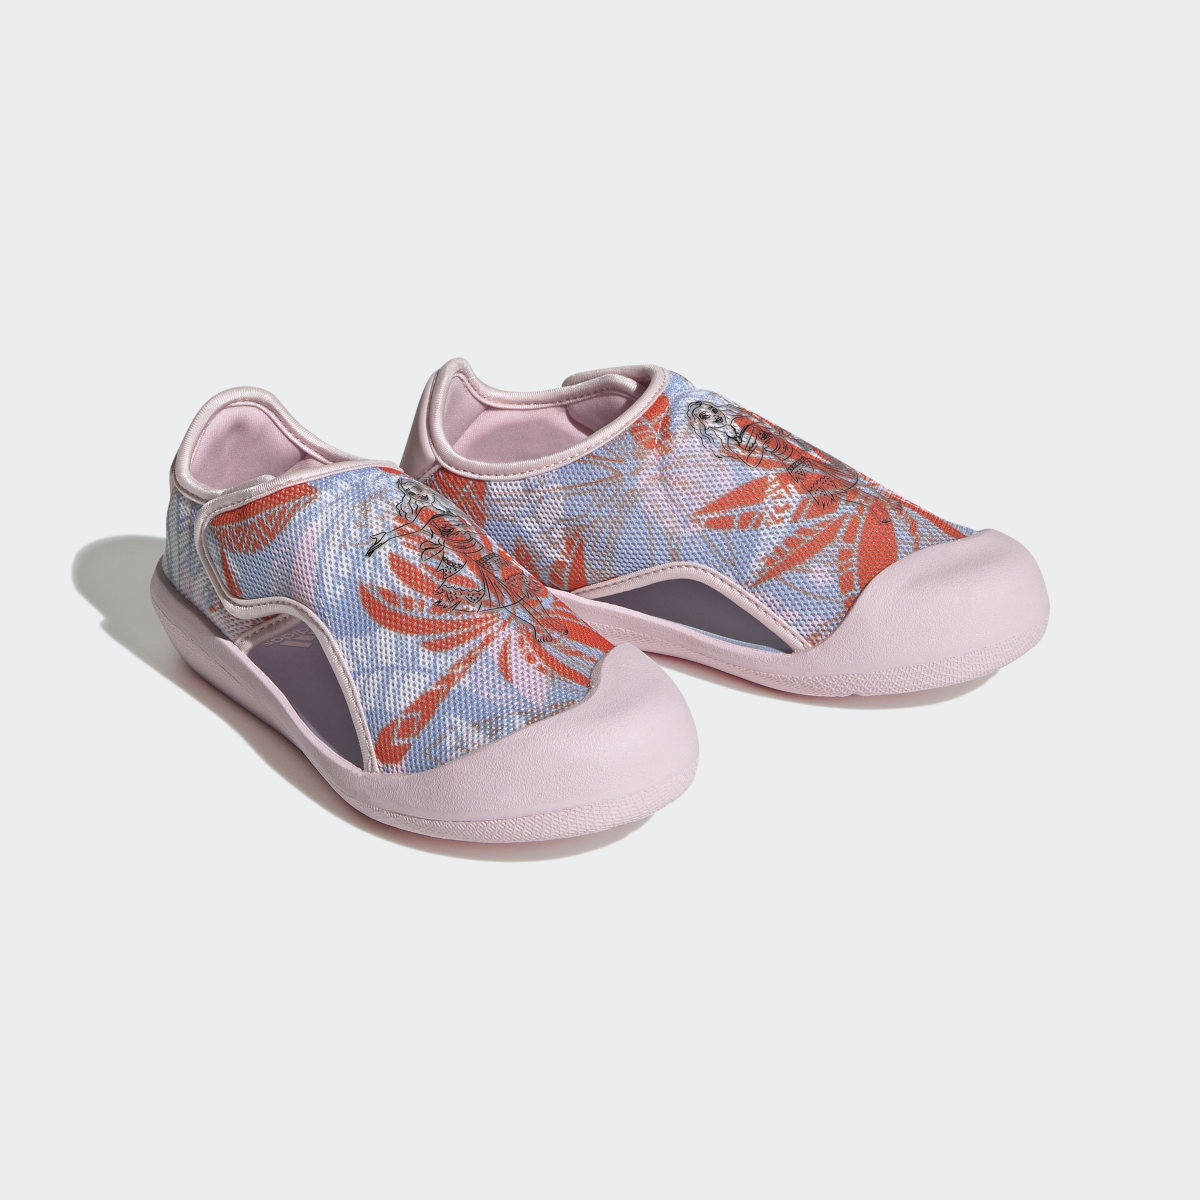 Adidas x Disney AltaVenture 2.0 Moana Swim Sandals. 5